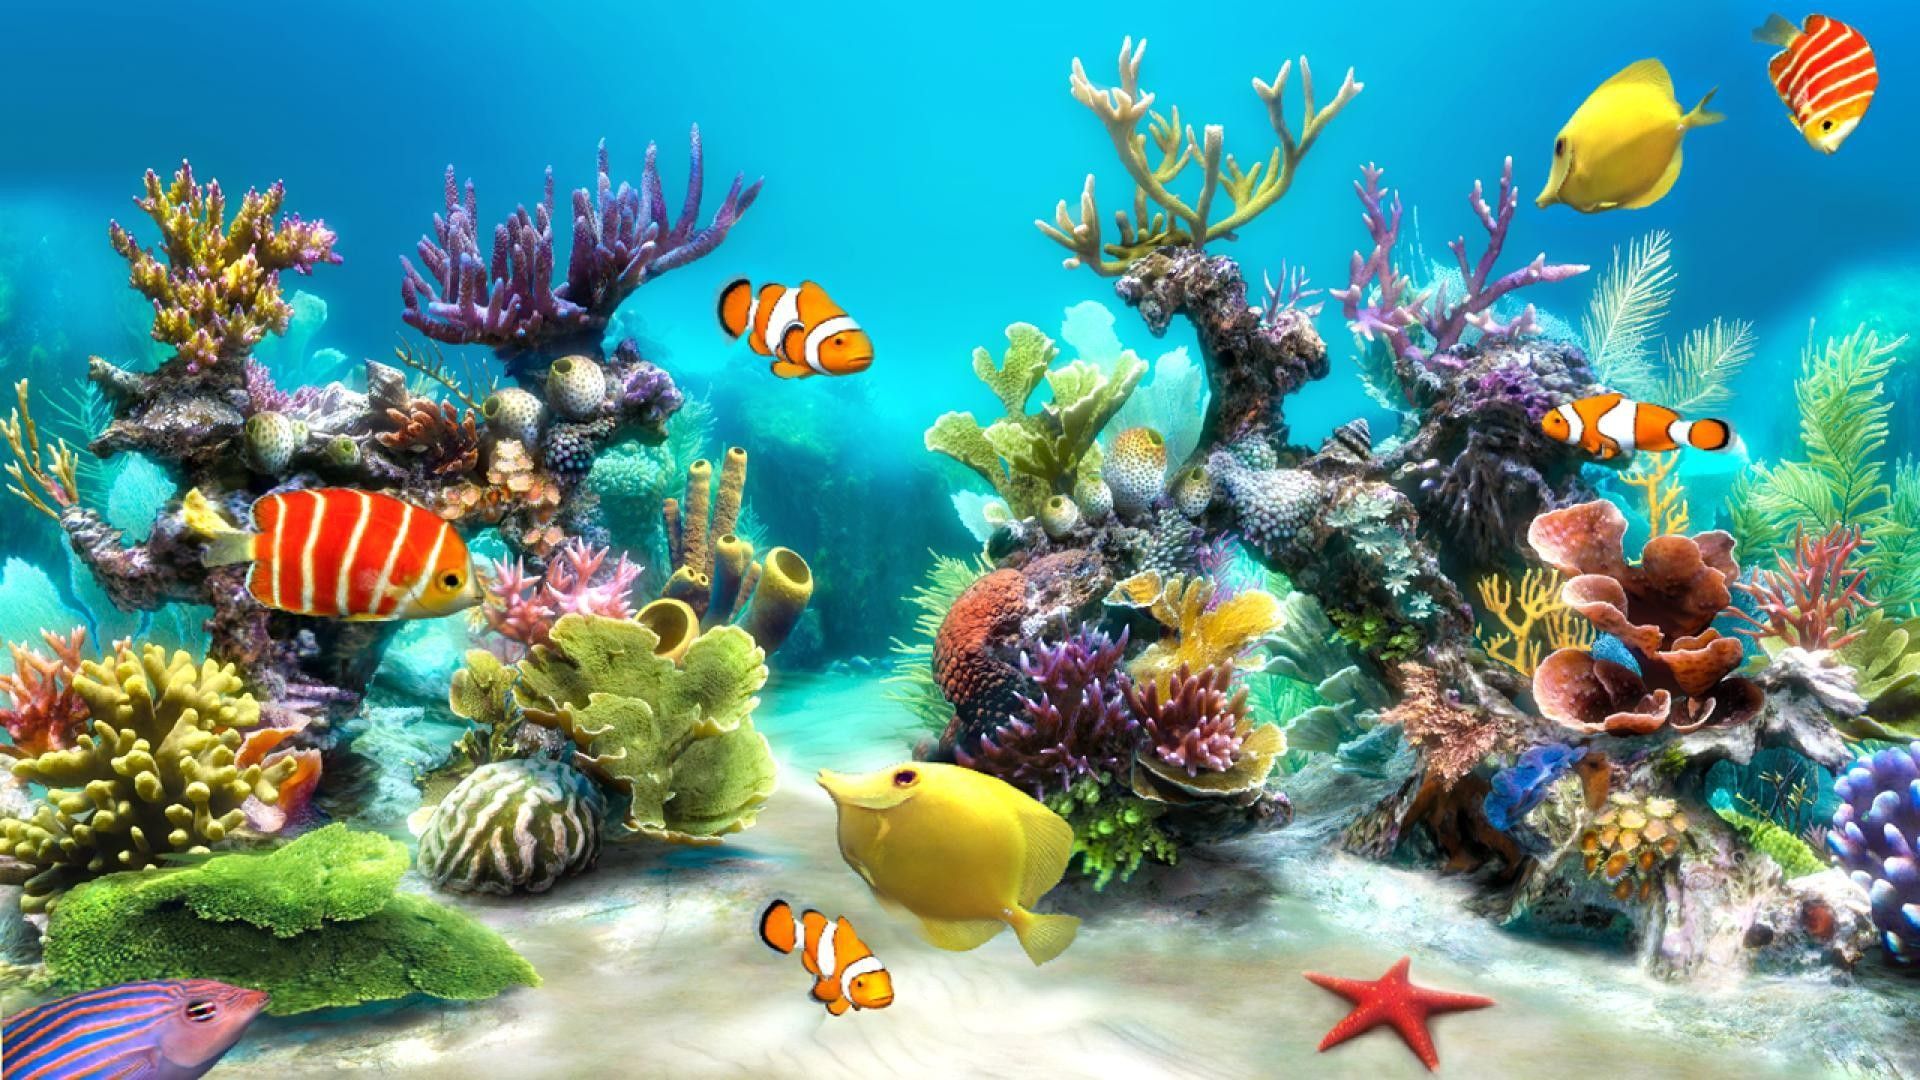 Aquarium 4K Live Wallpaper Apk Download for Android- Latest version 5.0-  com.credianz.aquarium4k